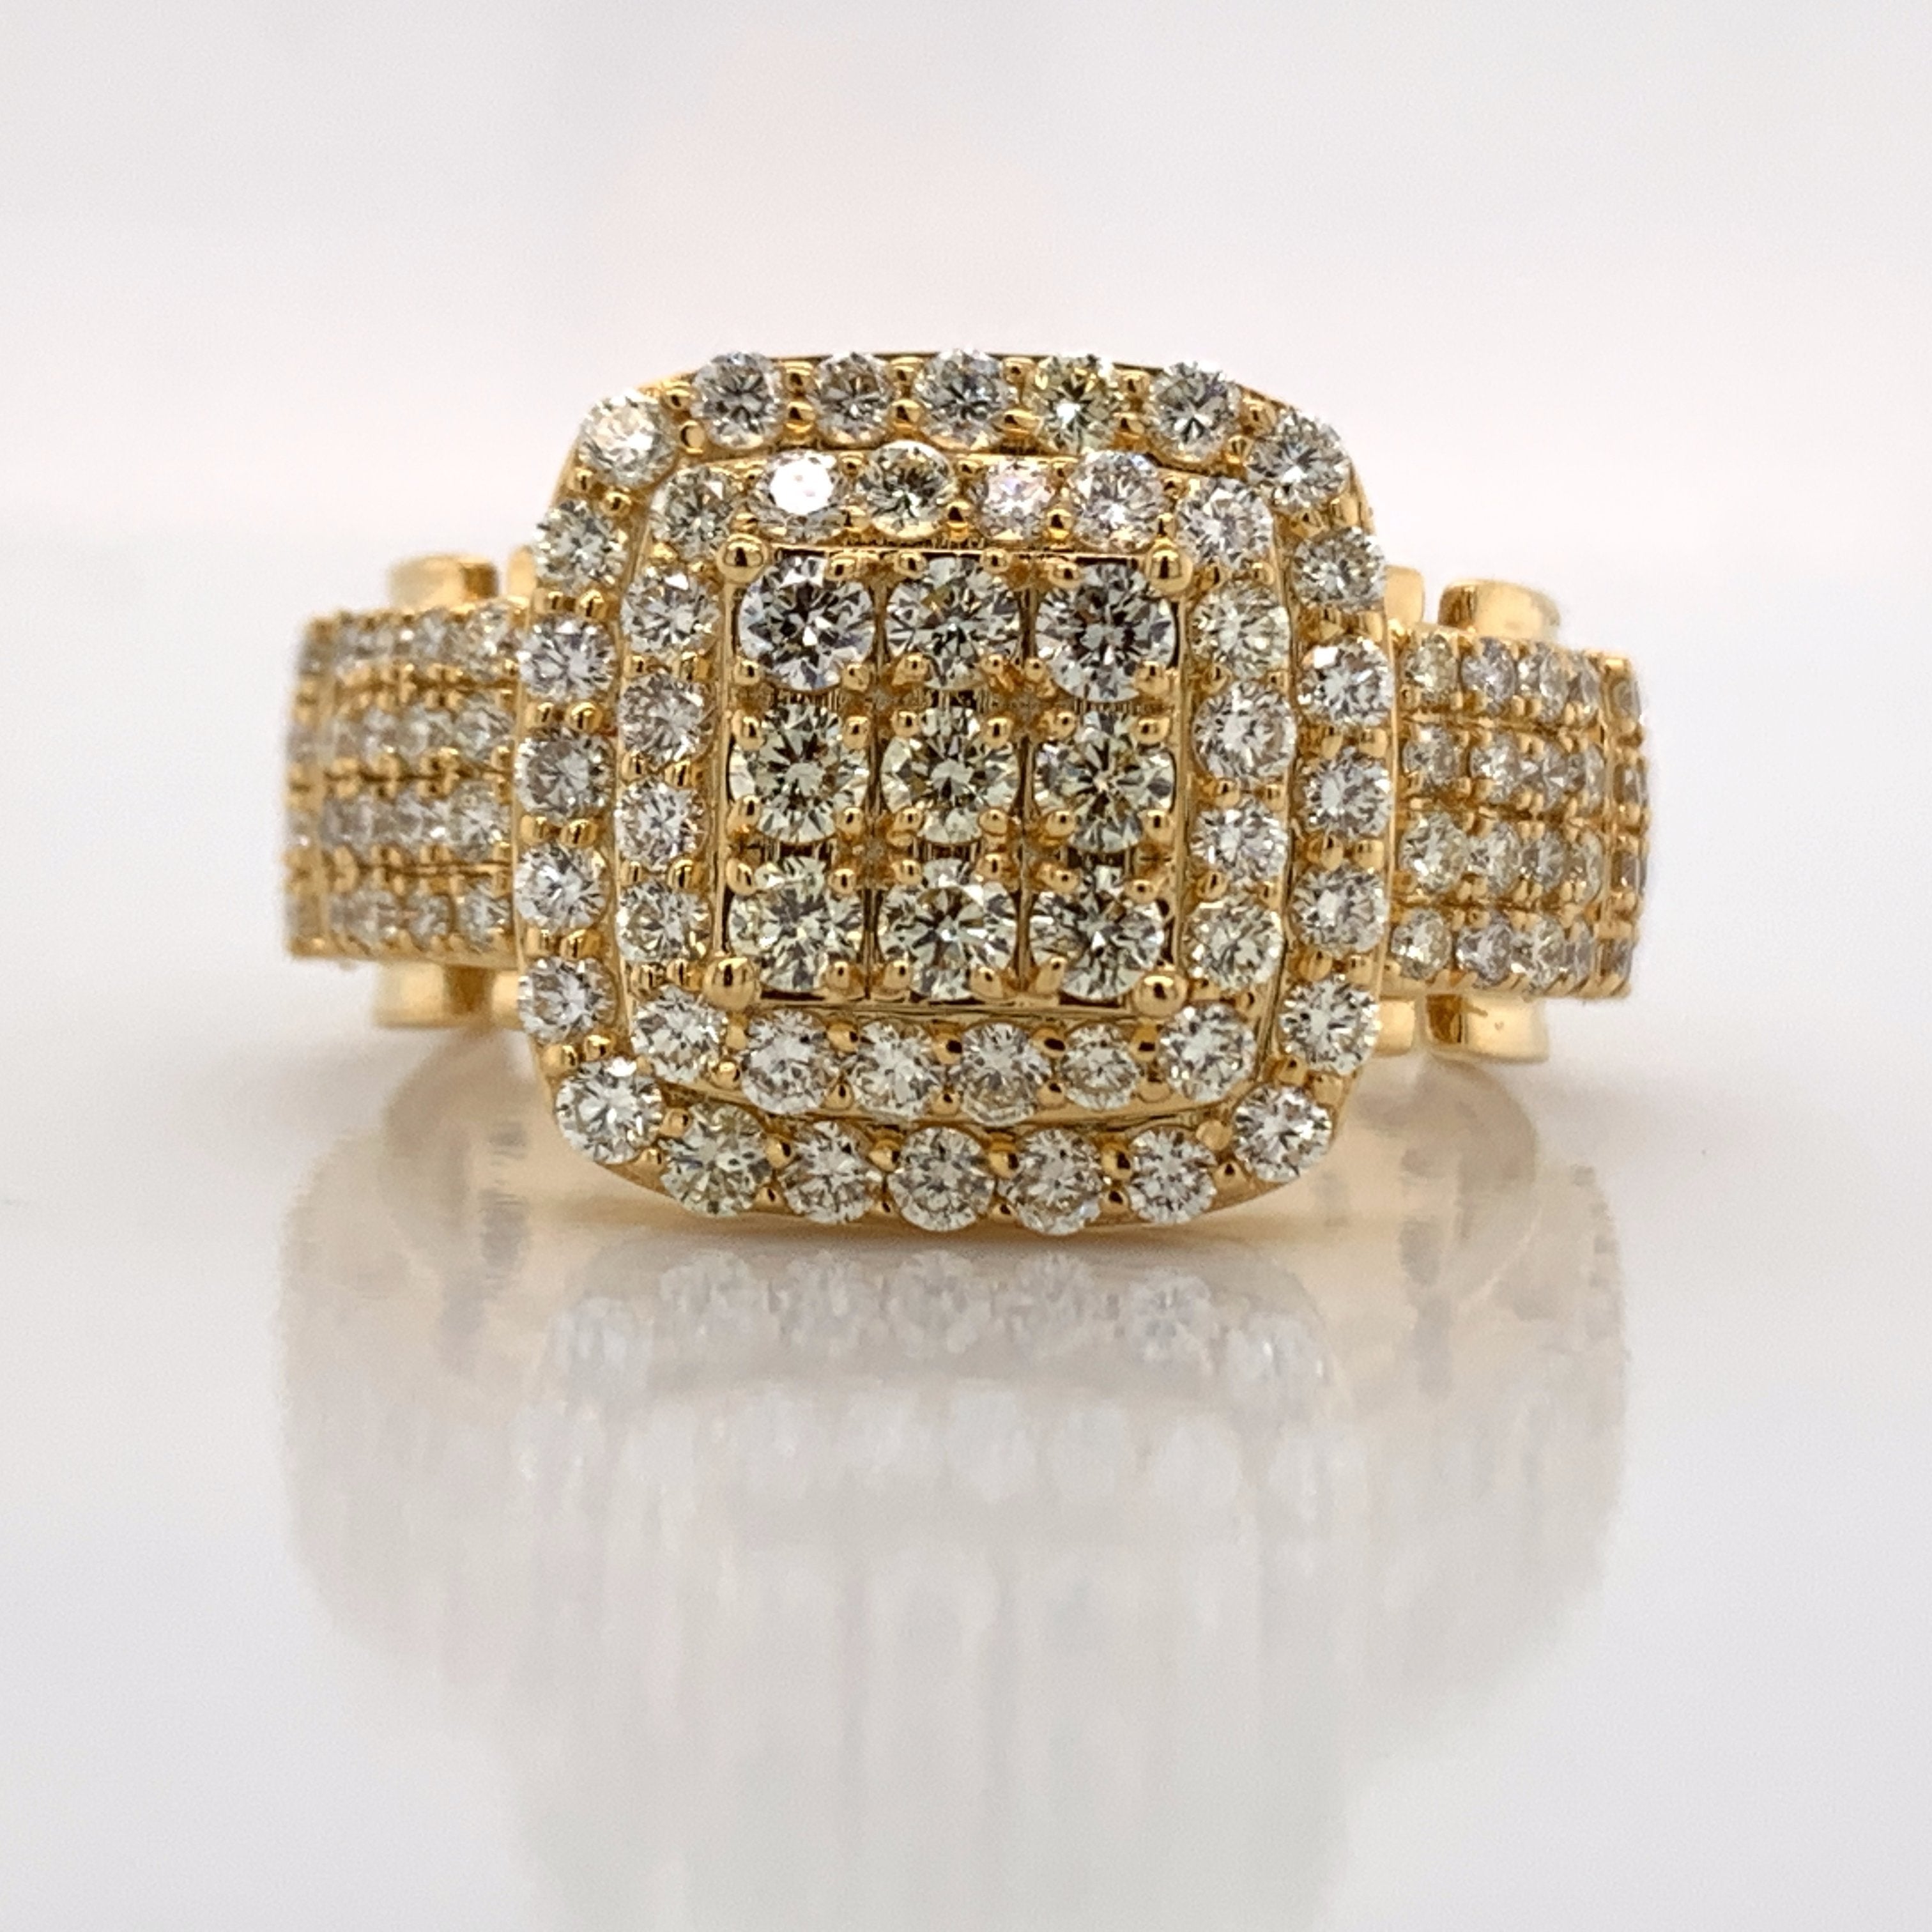 1.91 CT. Diamond Ring in 10K Gold - White Carat Diamonds 